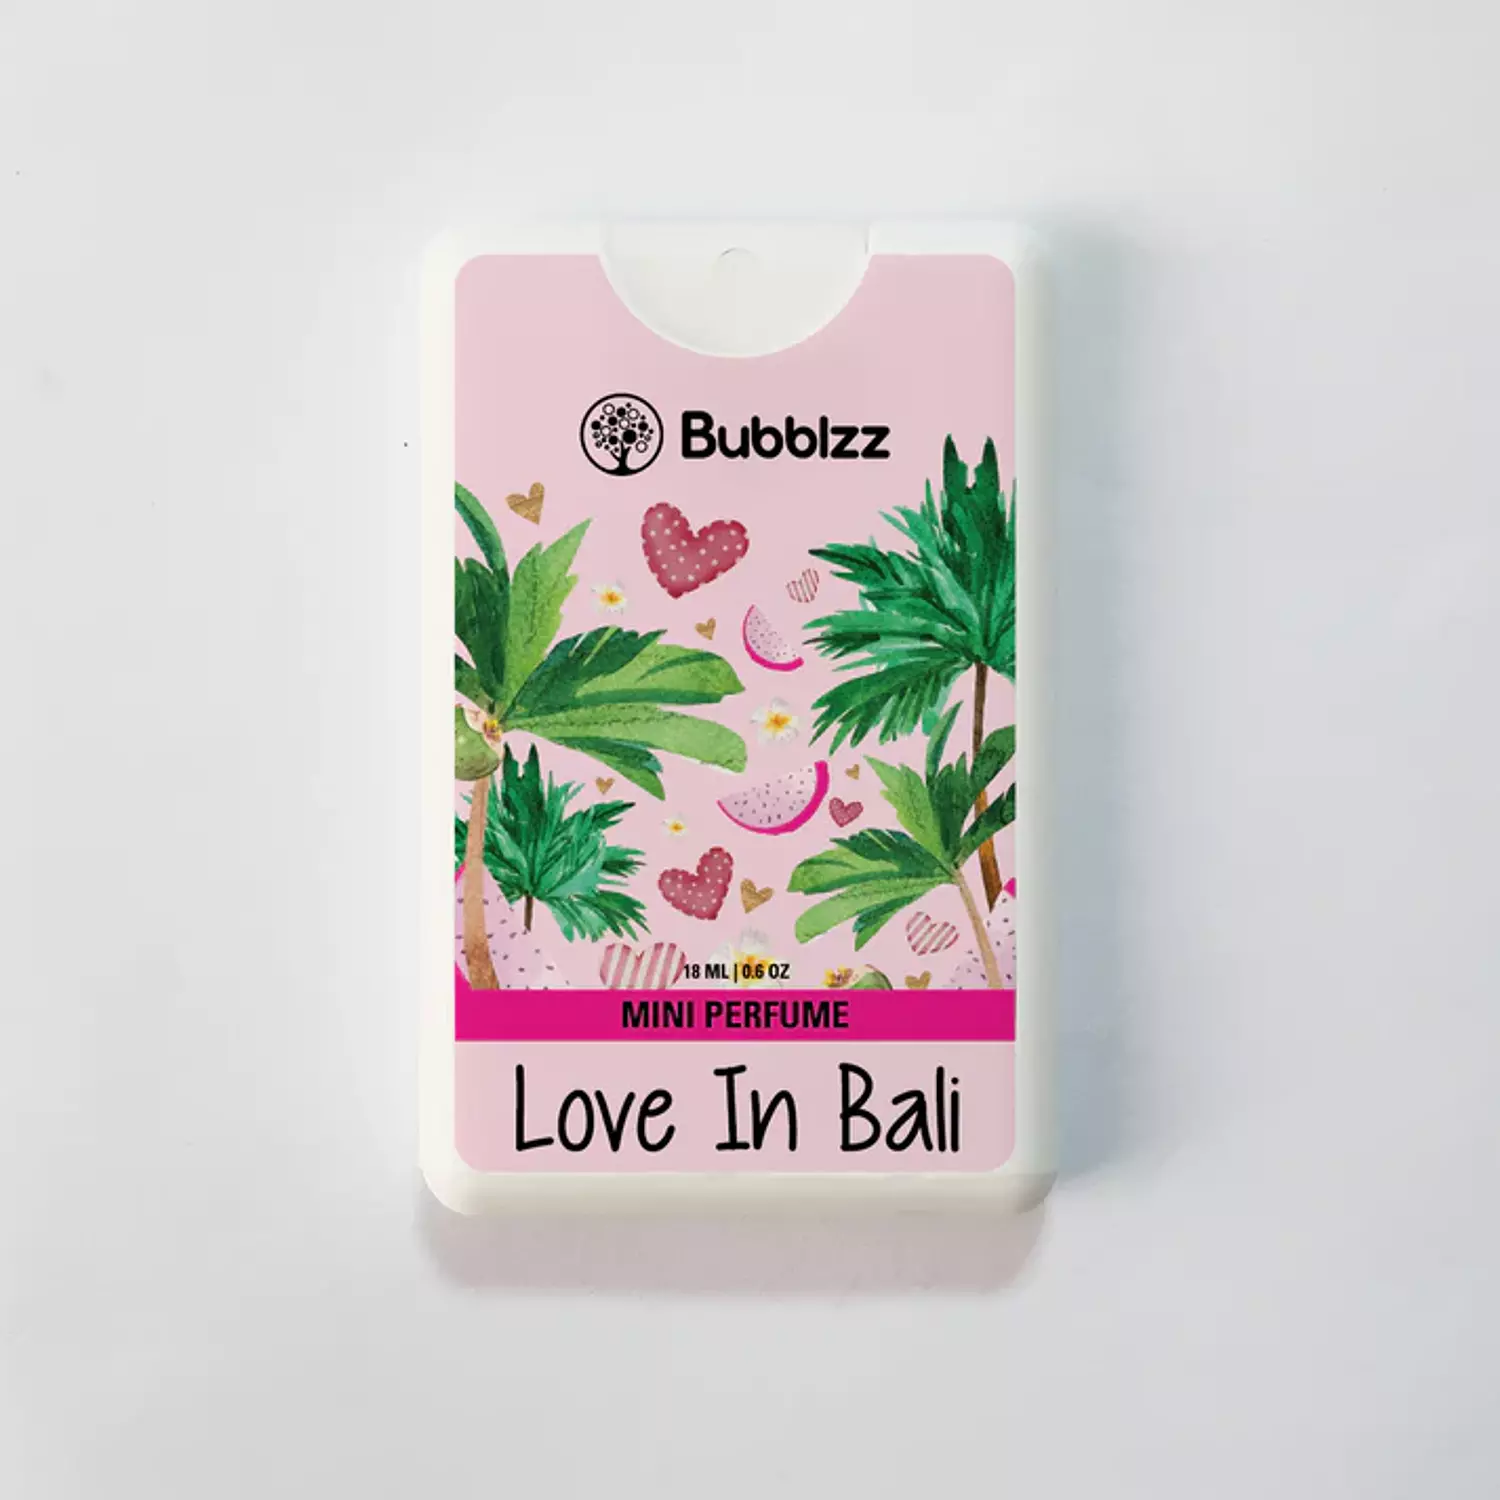 Bubblzz - Mini Perfume Love in Bali hover image